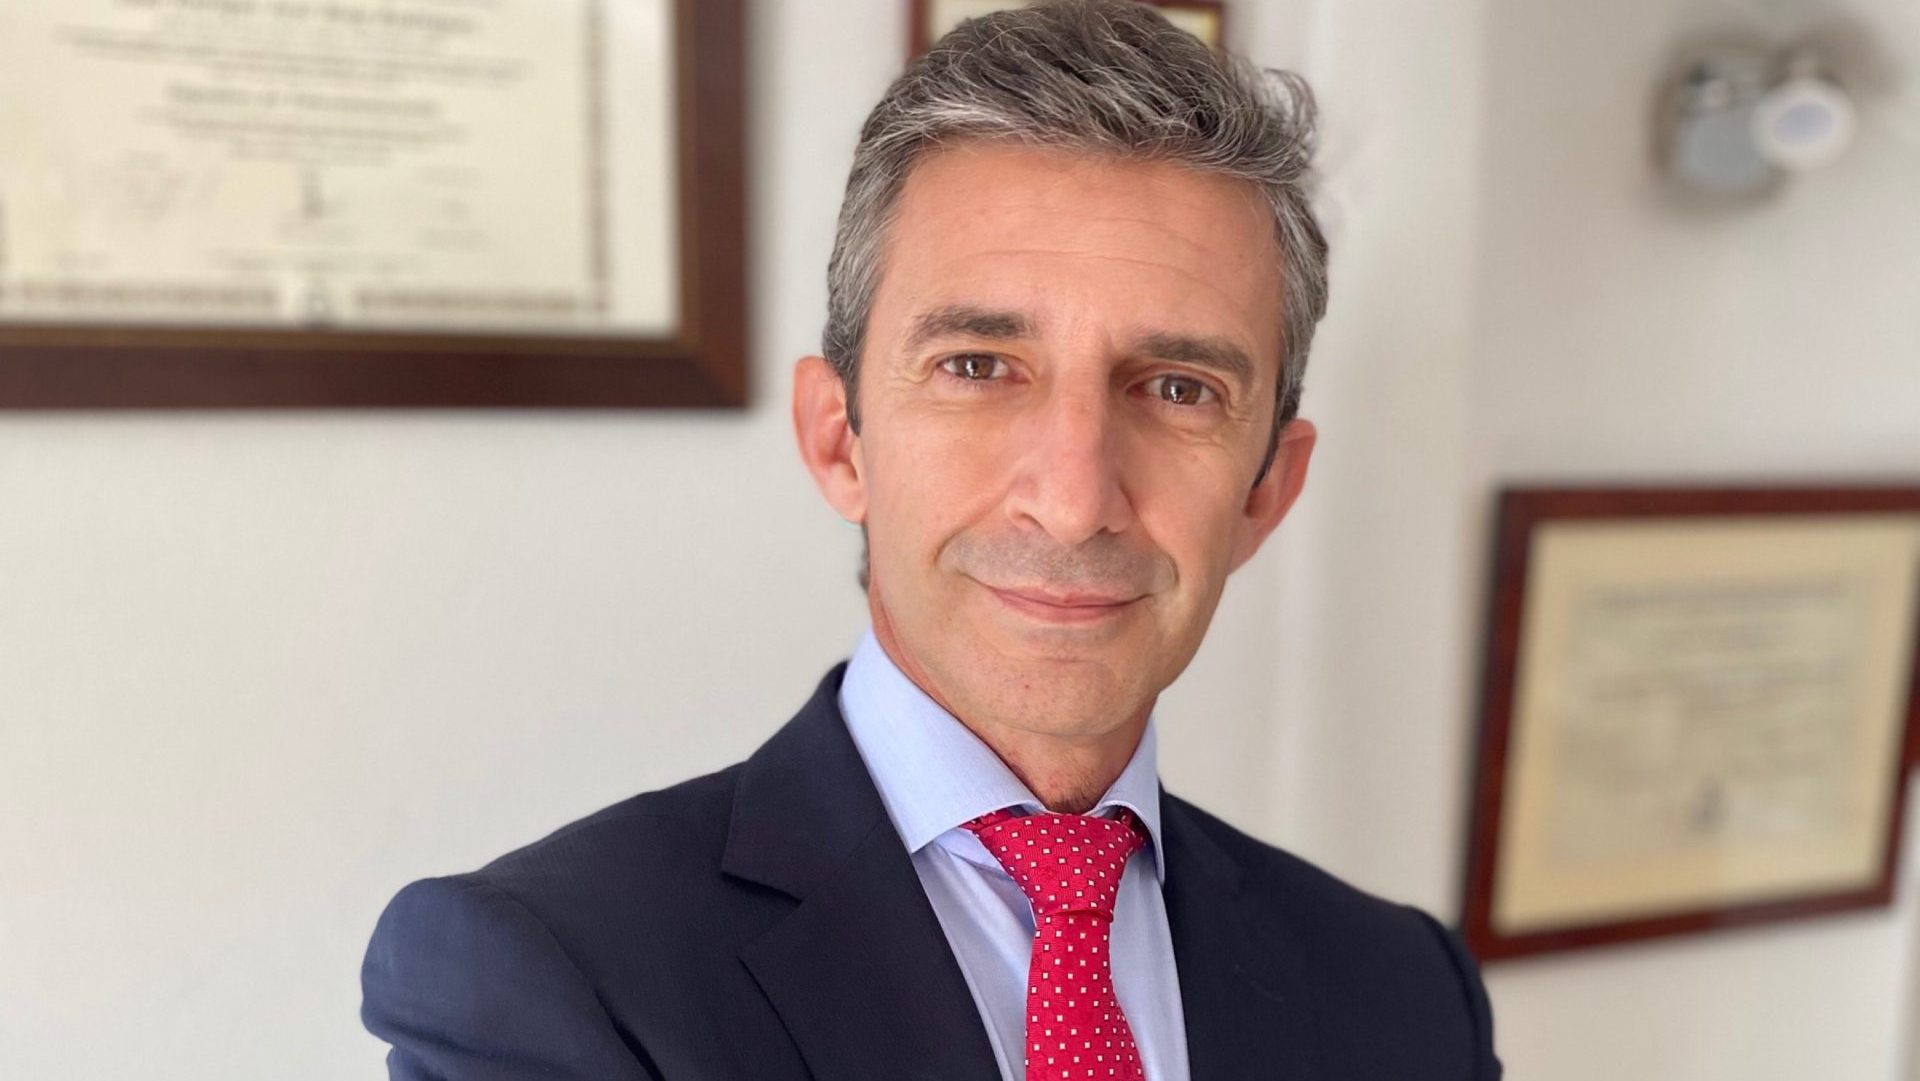 Enrique Roig, ESAsolar new Managing Director